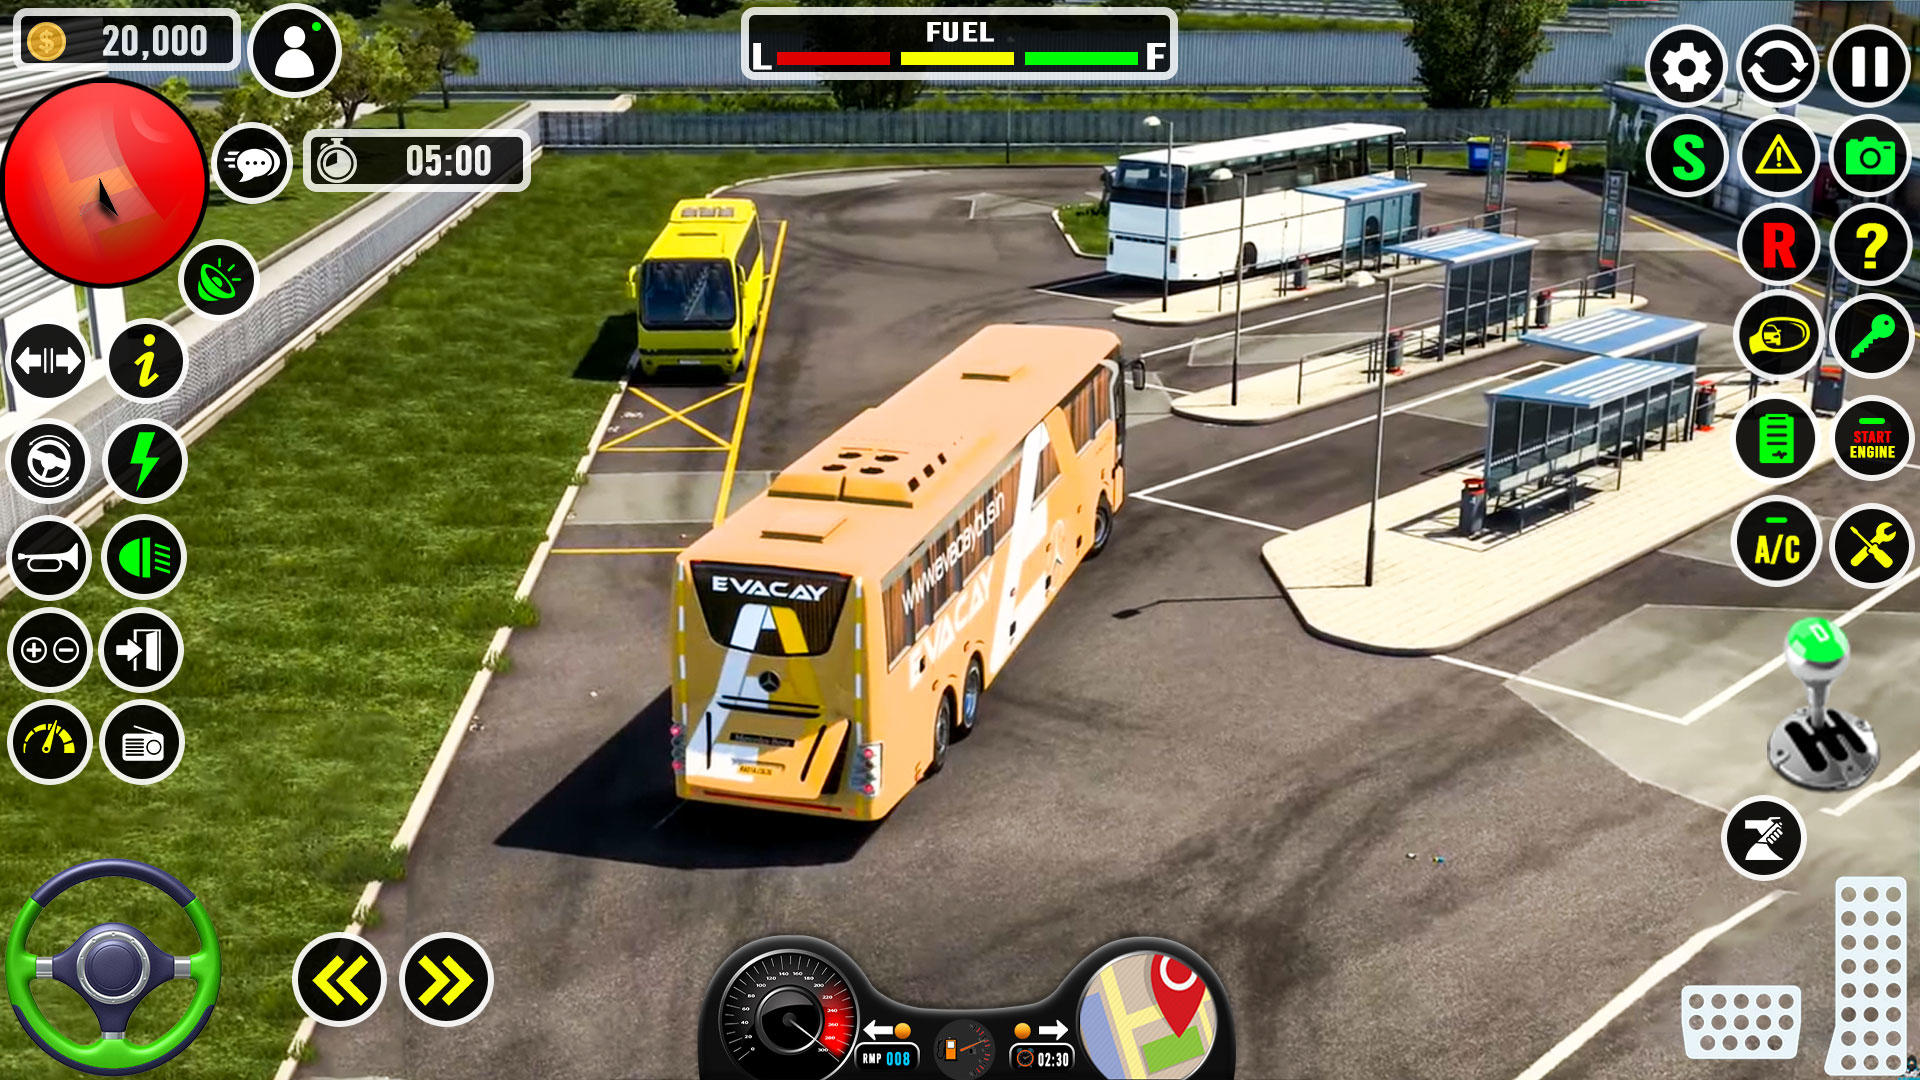 Screenshot 1 of City Bus Driving 3D Games 0.1